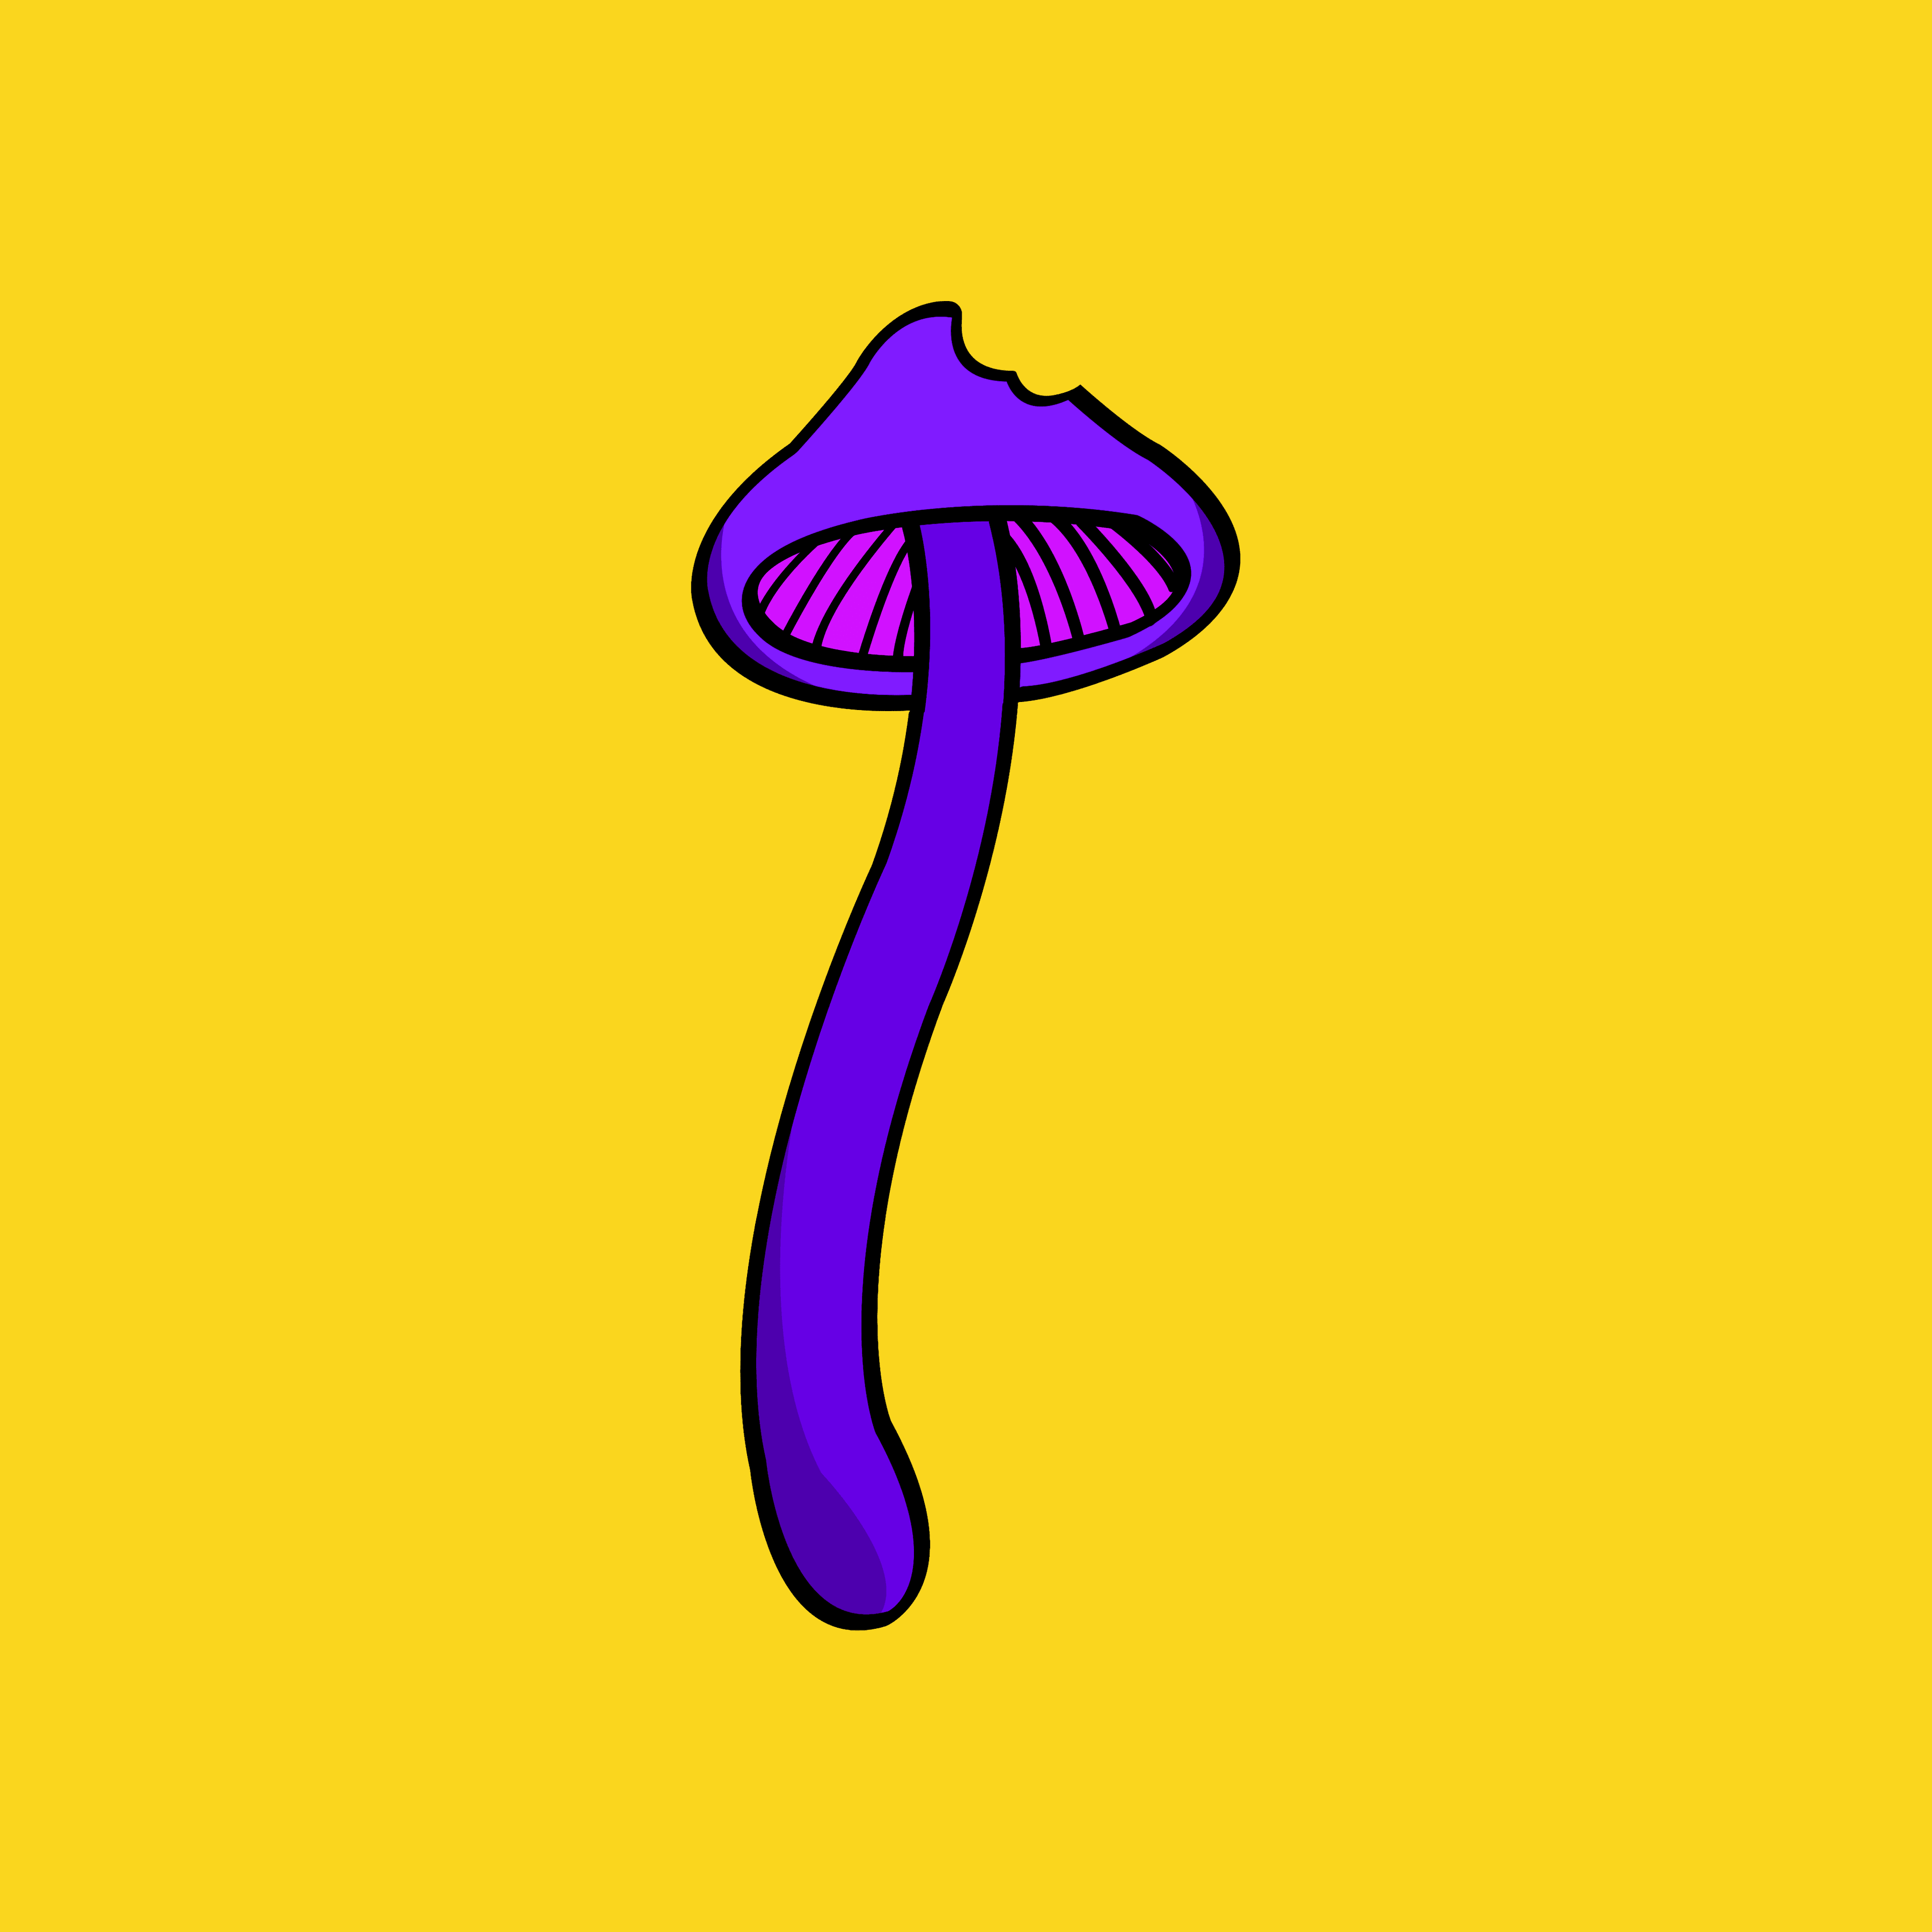 Trippachu's Purple Shroom